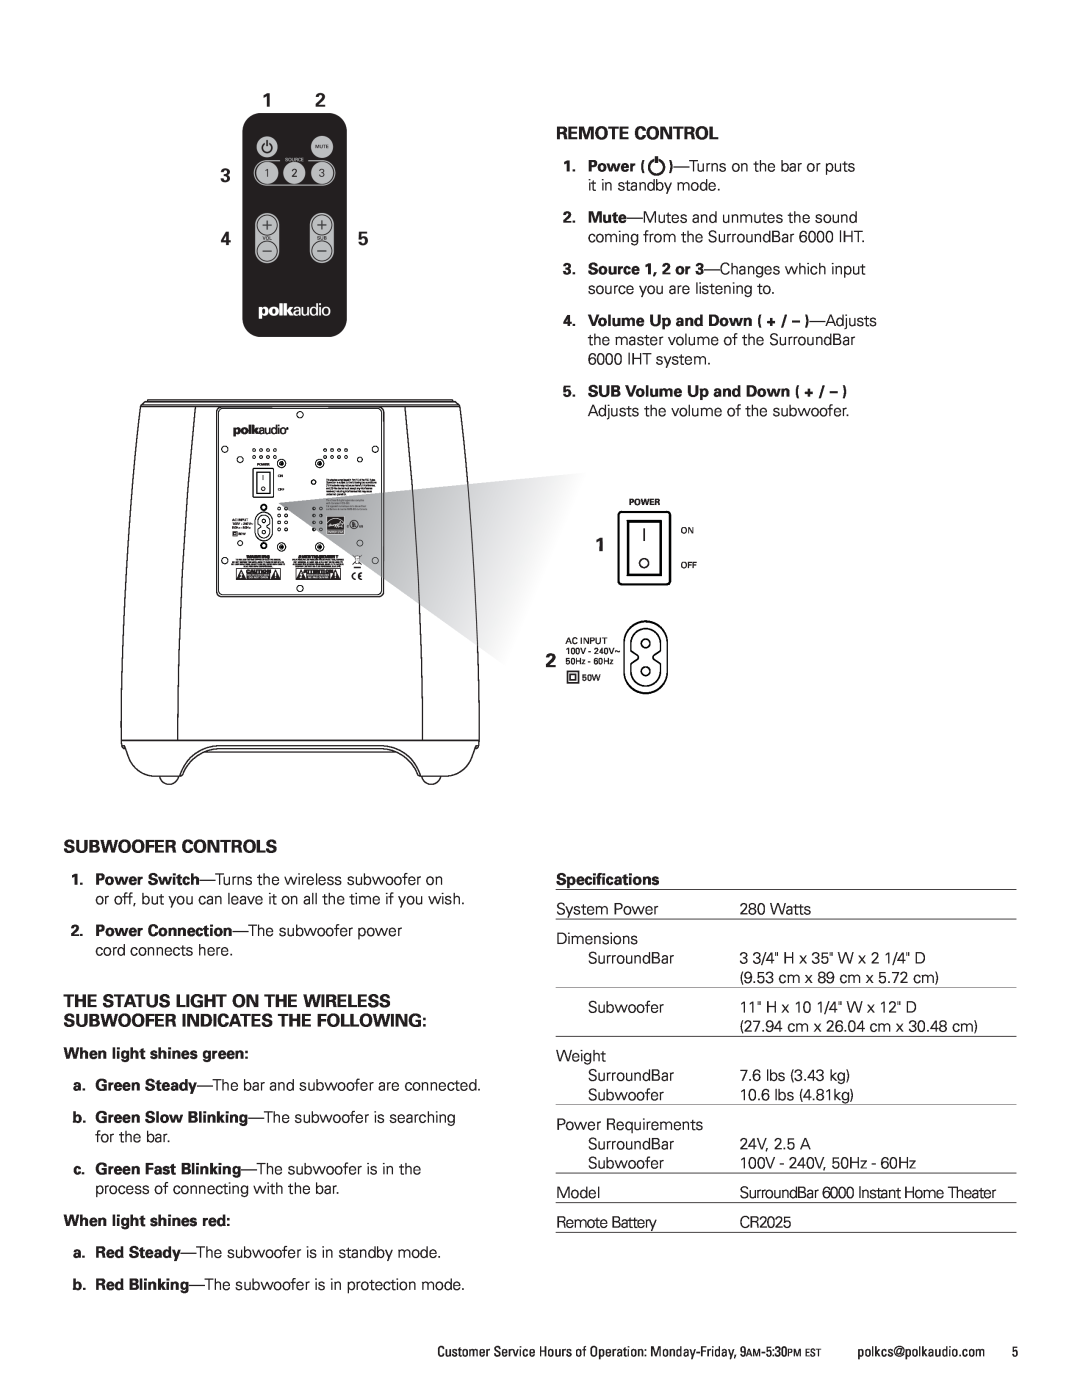 Polk Audio AM1600-A manual 1 3, Subwoofer Controls, Remote Control 